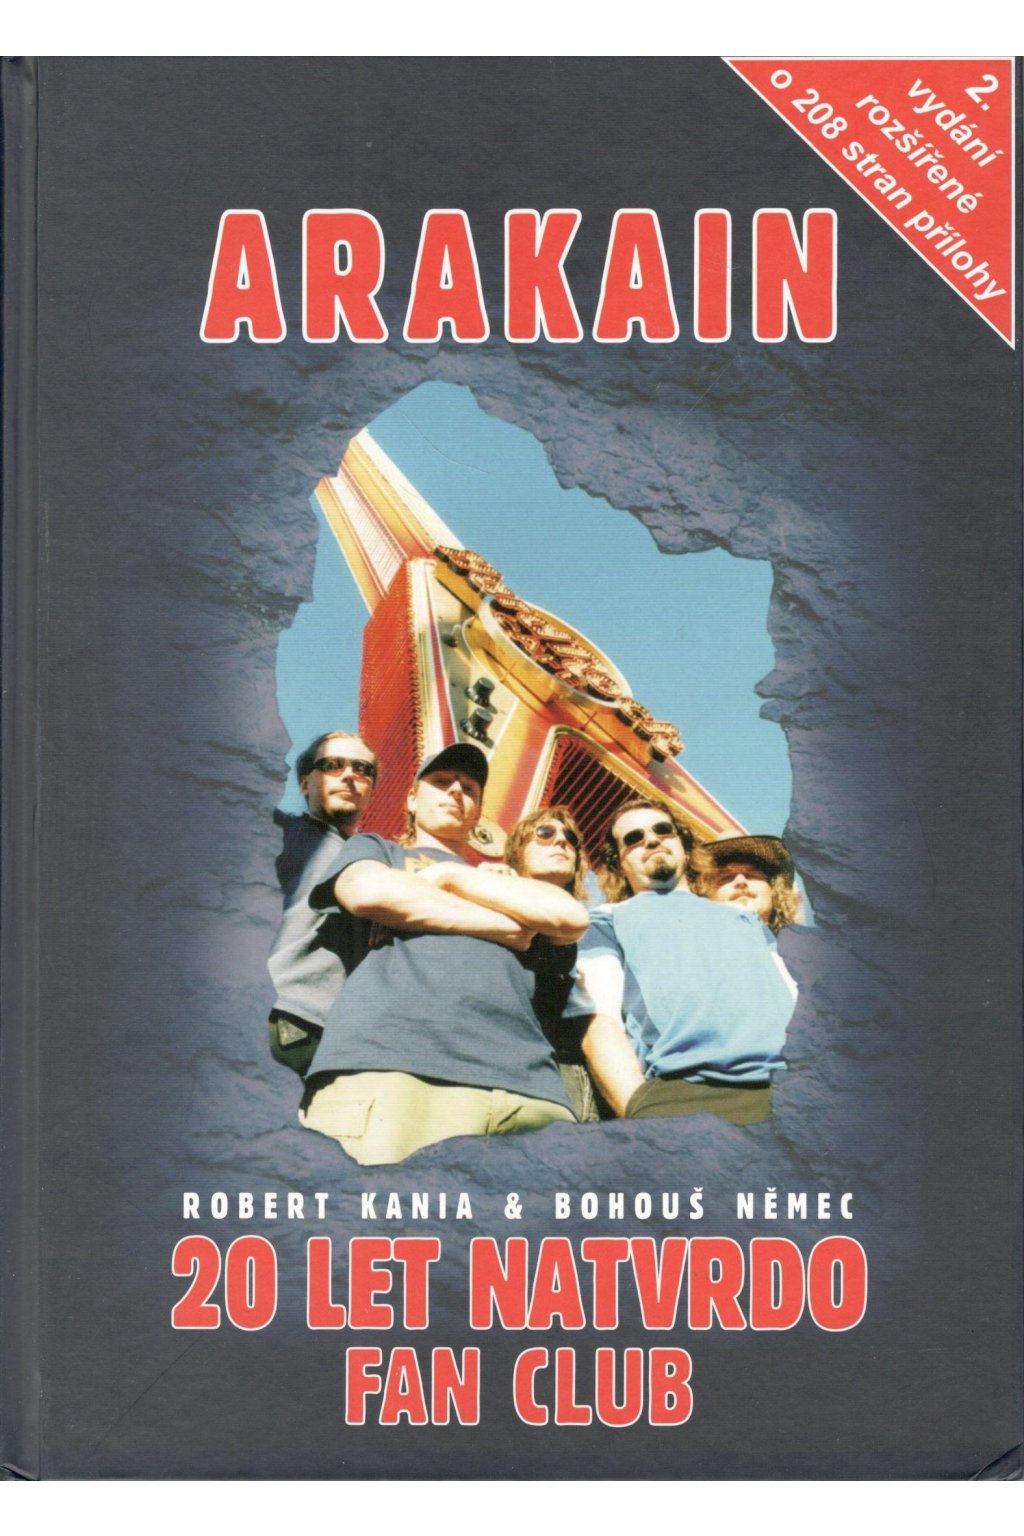 ARAKAIN- 20 let natvrdo